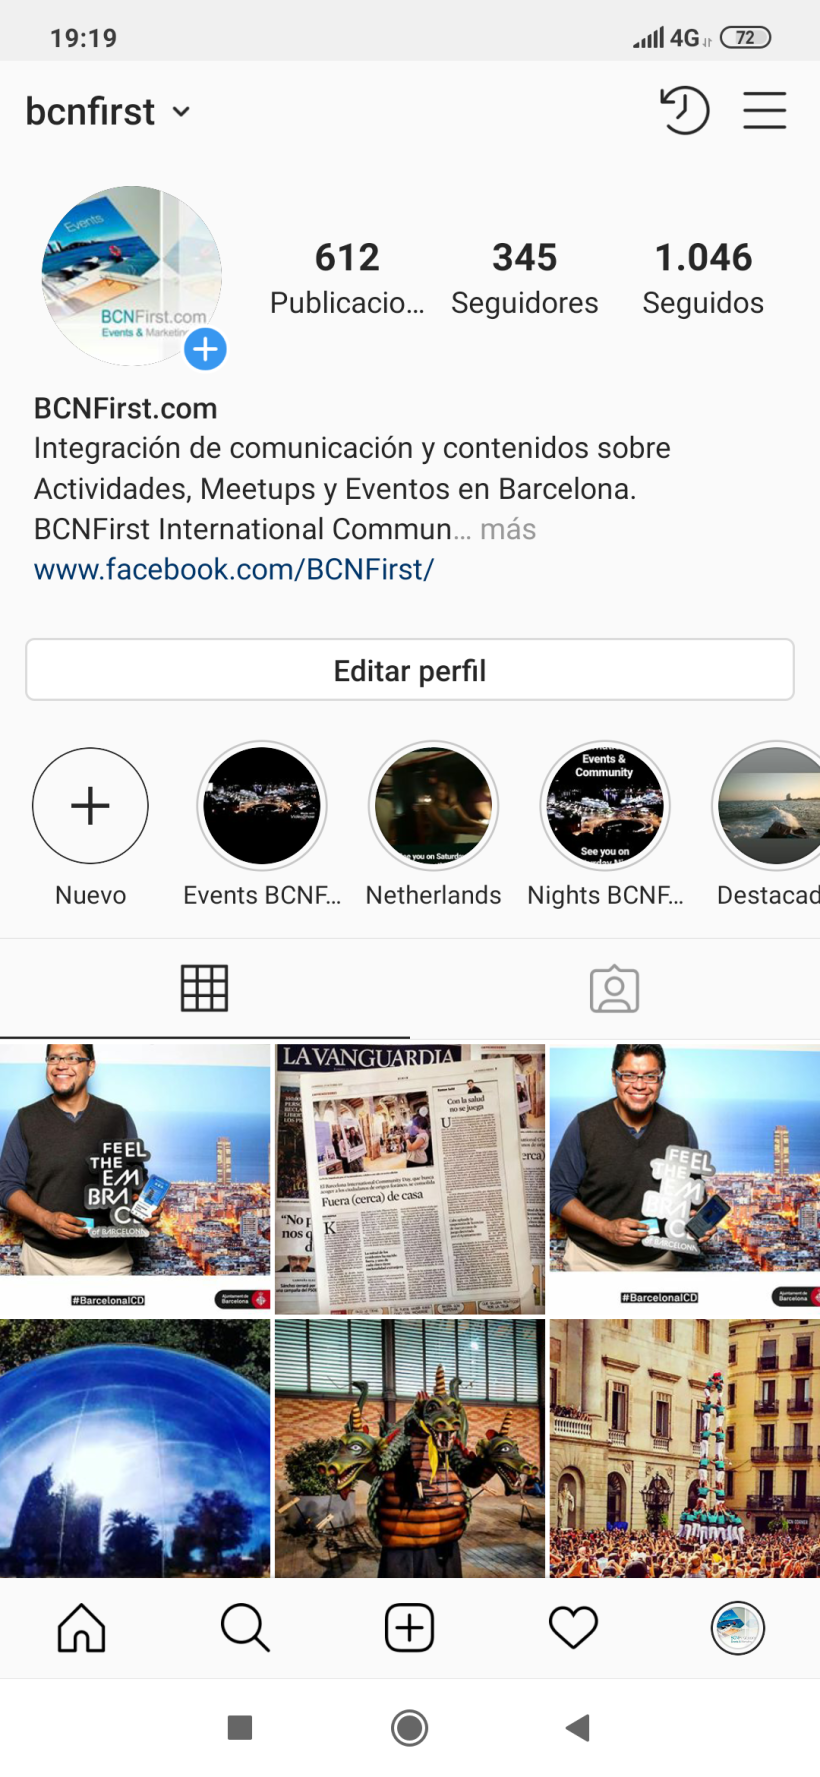 La Vanguardia Durante el International Community Day | Instagram @BCNFirst